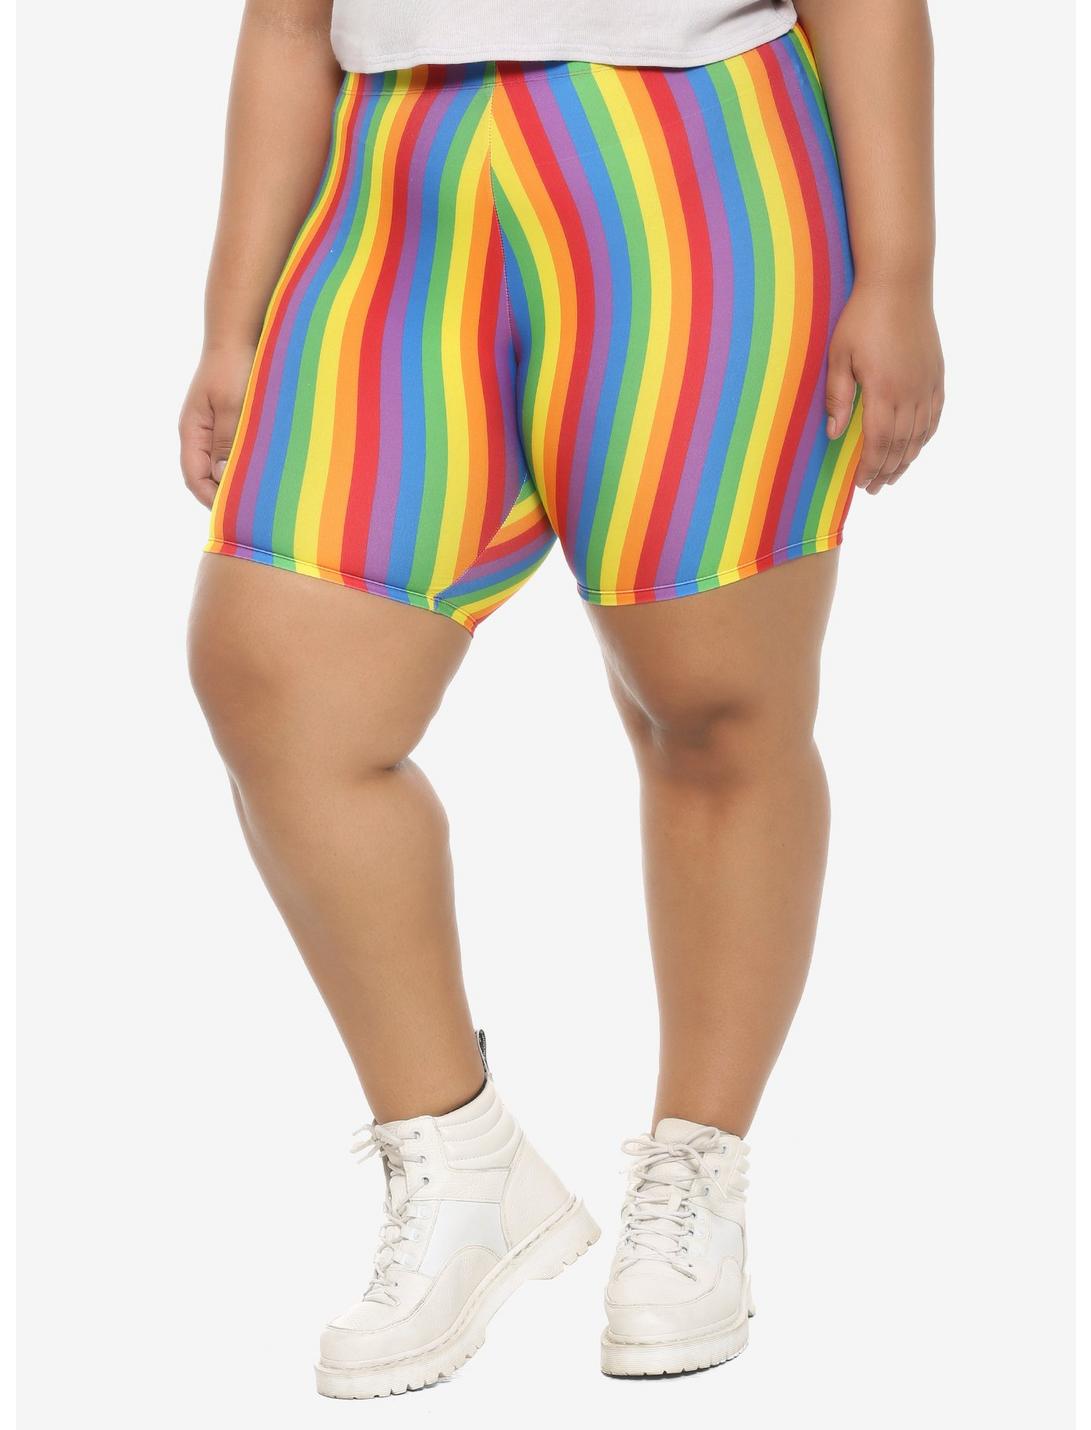 Rainbow Girls Bike Shorts Plus Size, RAINBOW, hi-res